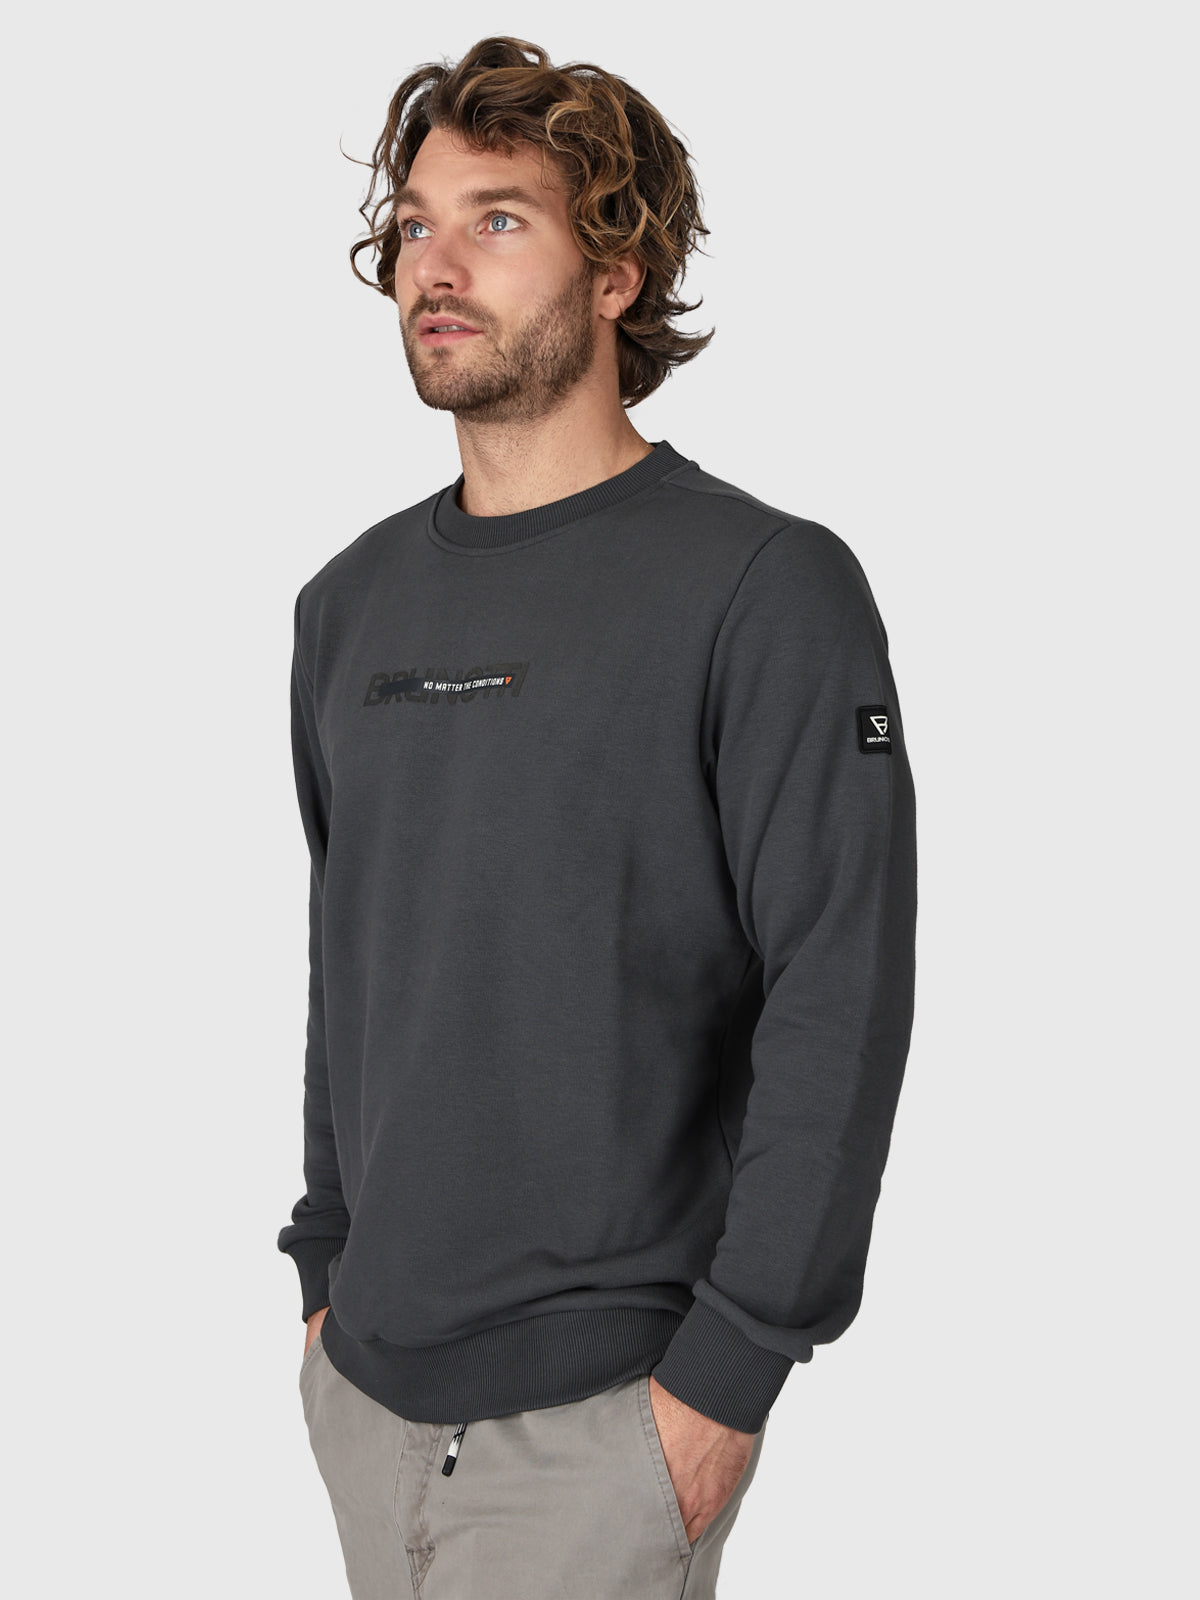 Rotcher Herren Sweatshirt | Grau